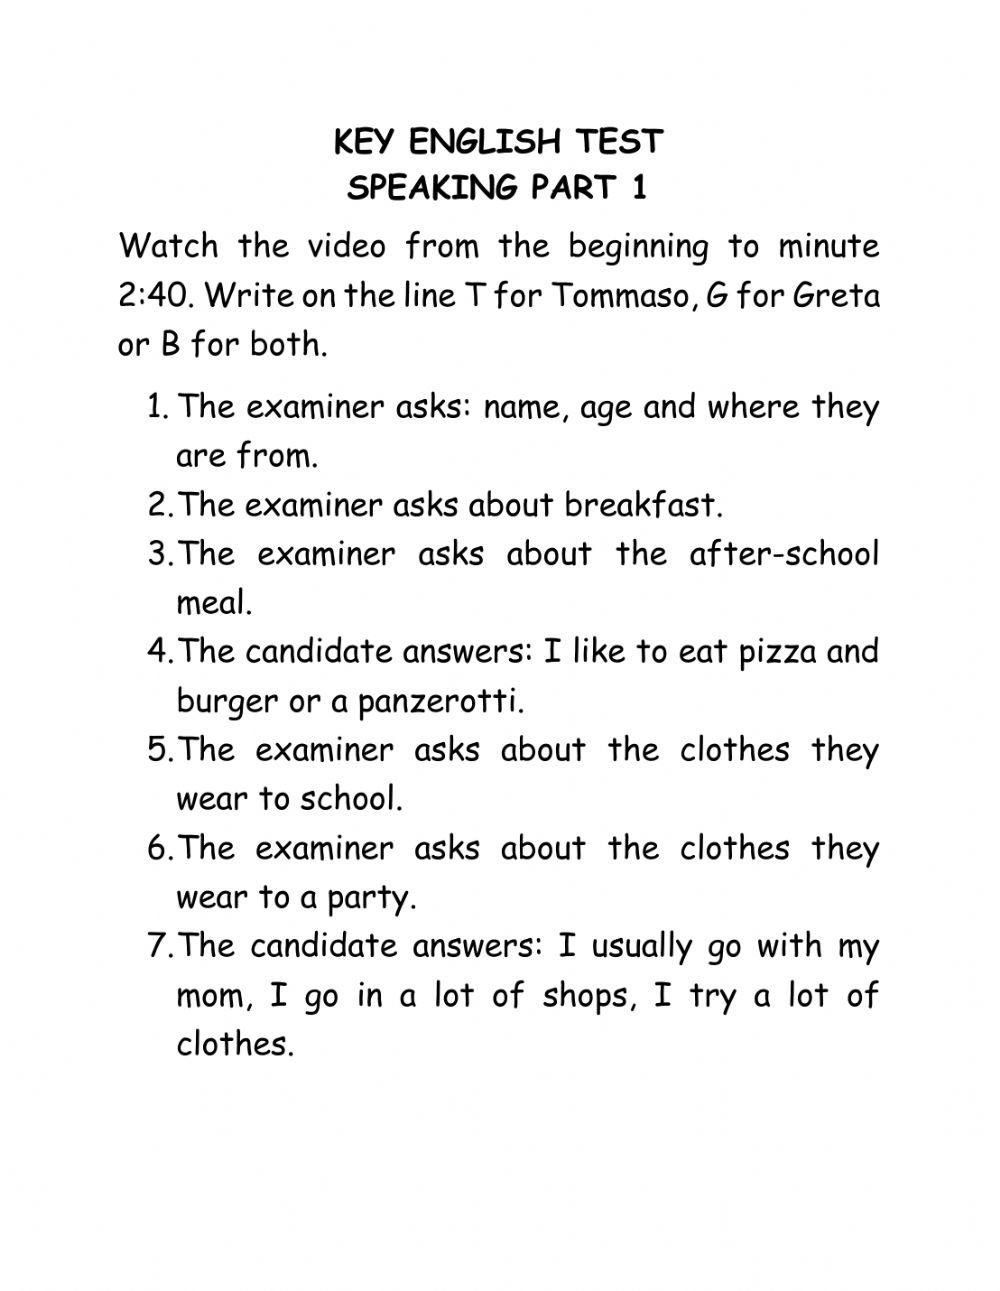 Key speaking part 1 worksheet | Live Worksheets